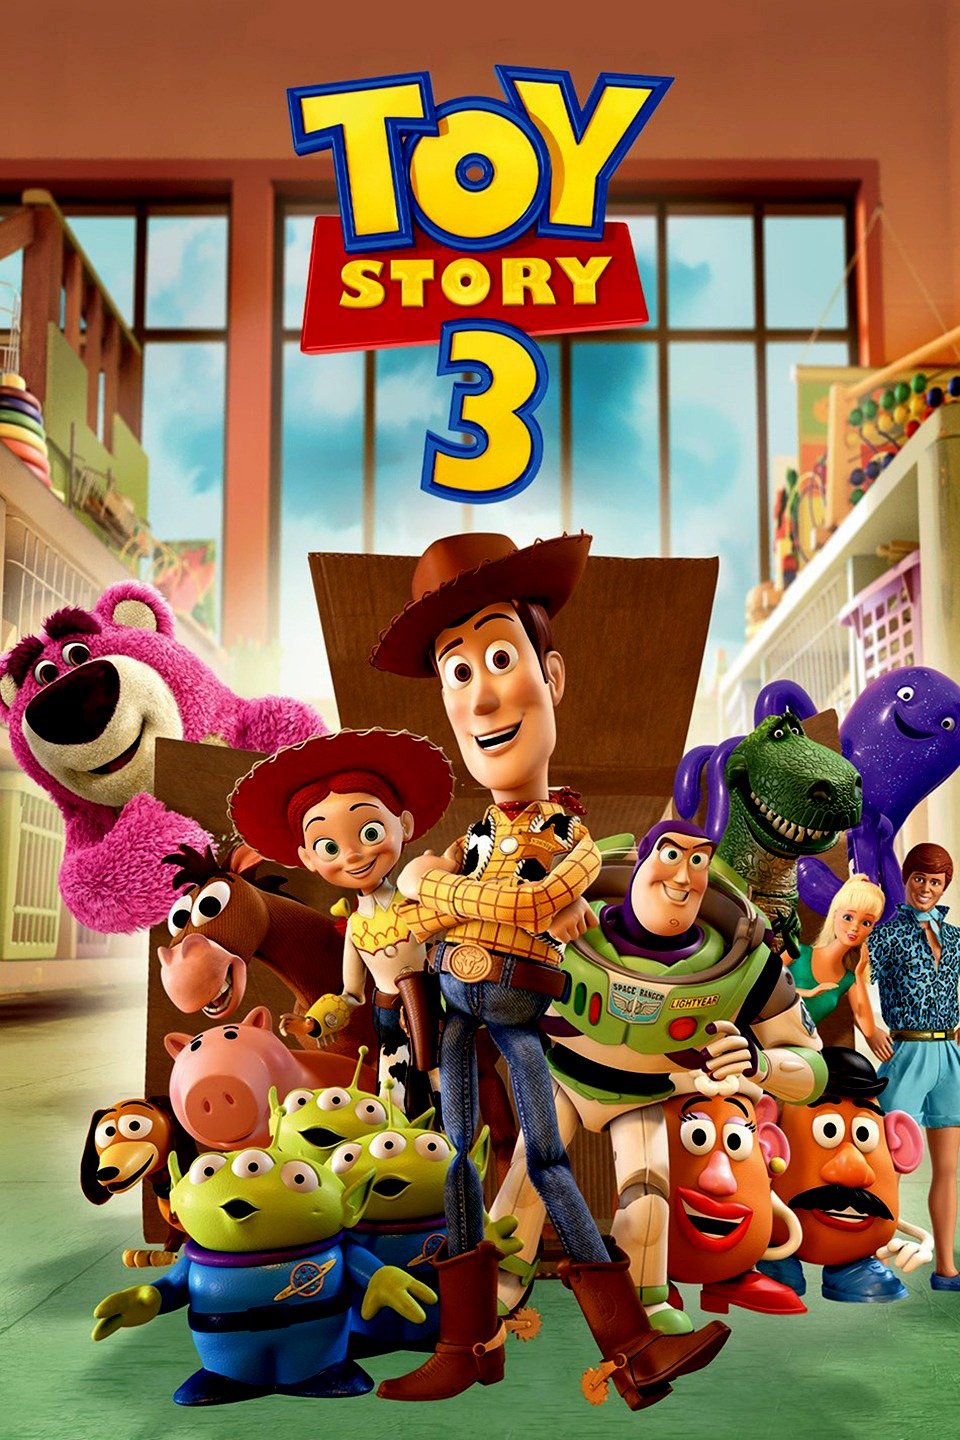 [MINI-HD] Toy Story 3 (2010) ทอย สตอรี่ ภาค 3 [720p] [พากย์ไทย 5.1 + อังกฤษ 5.1] [บรรยายไทย + อังกฤษ] [เสียงไทย + ซับไทย] [ONE2UP]